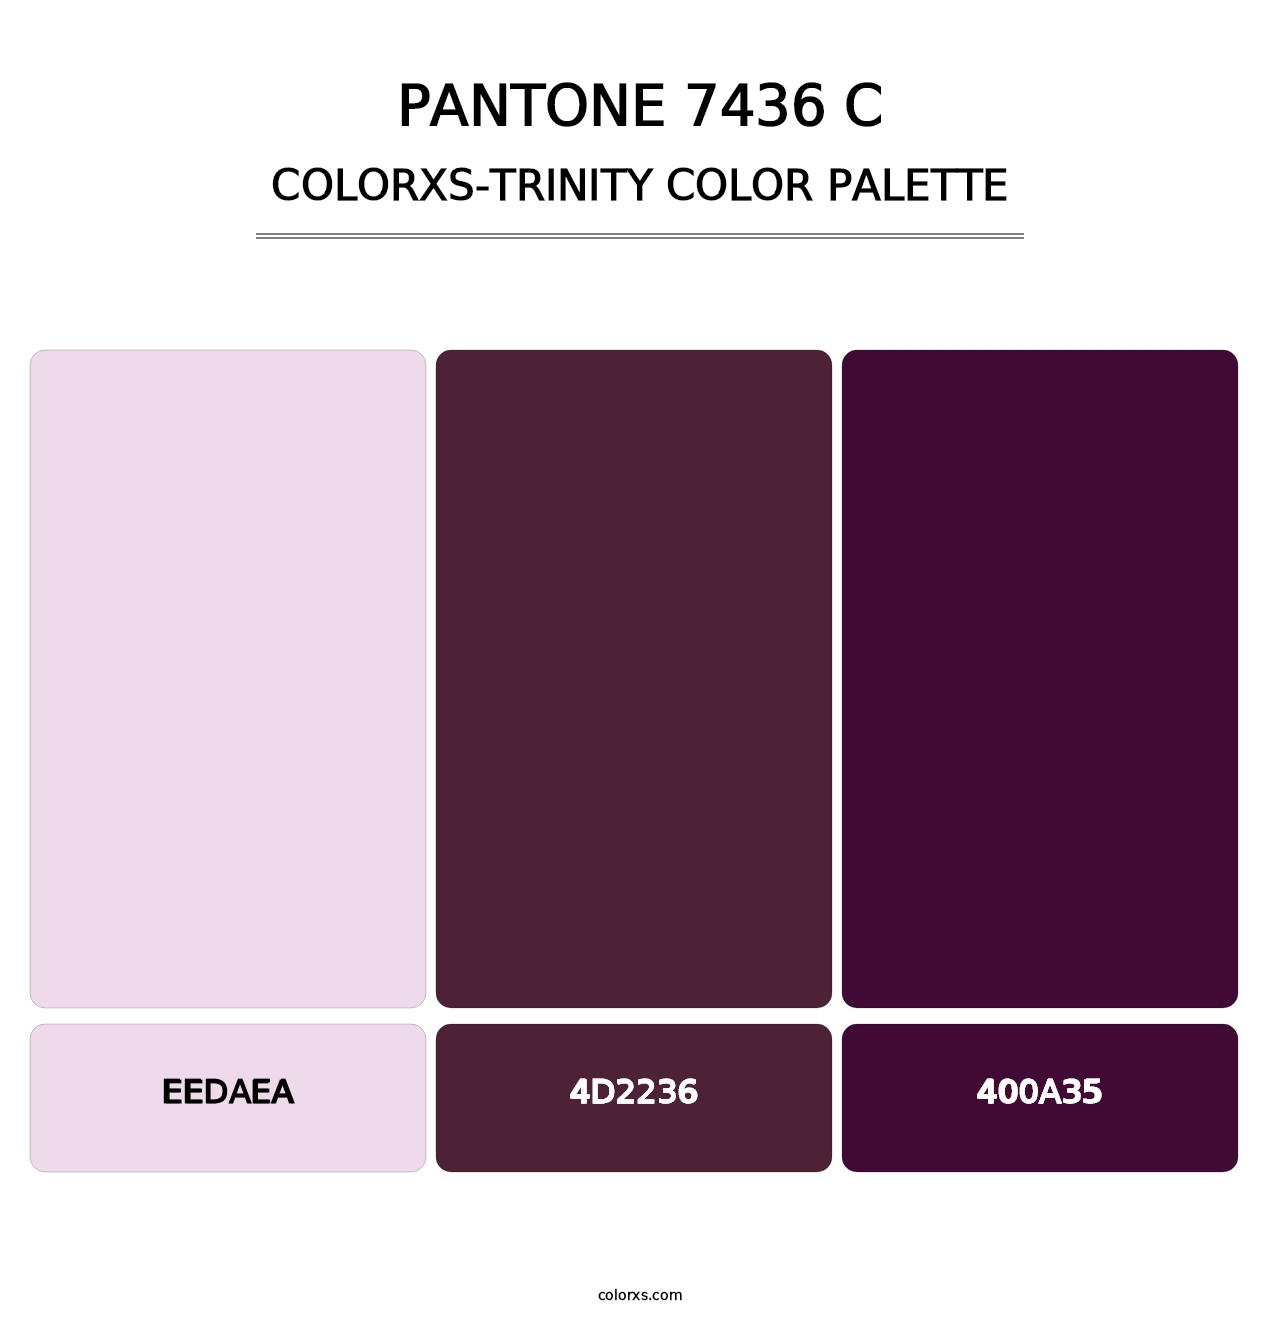 PANTONE 7436 C - Colorxs Trinity Palette